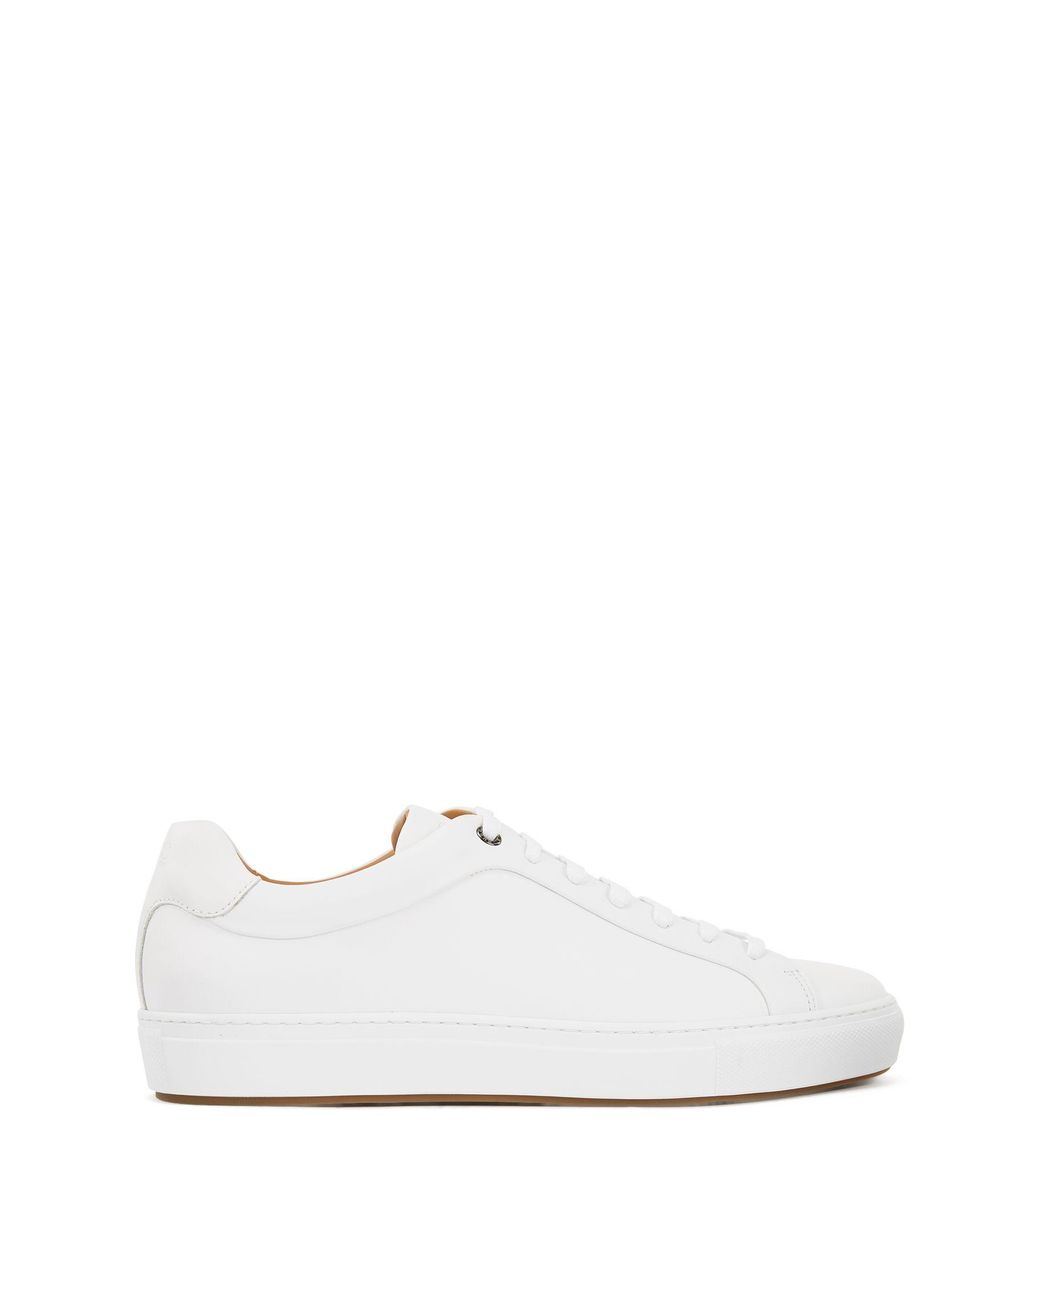 BOSS by Hugo Boss Leather Sneaker | Mirage Tenn in White Leather (White ...